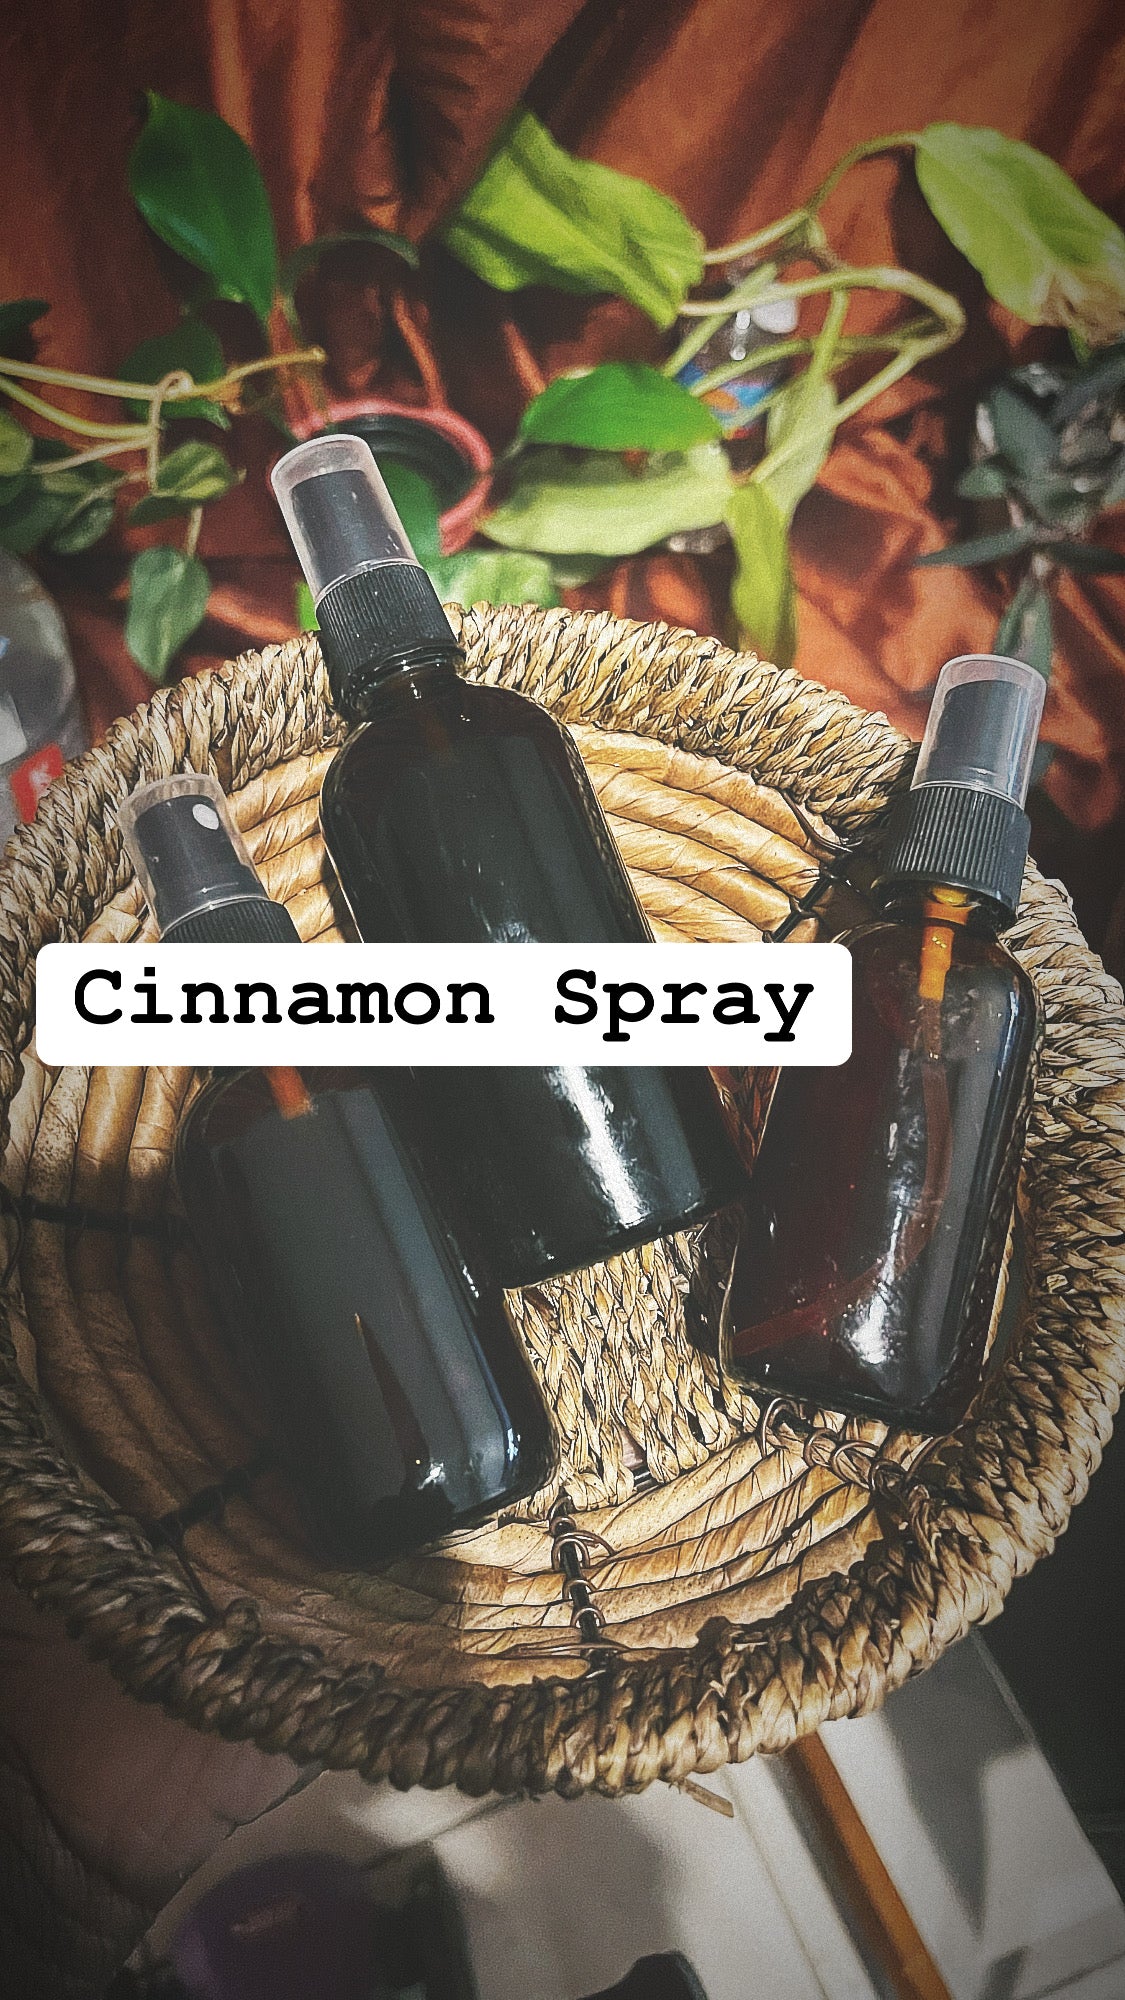 Canela / Cinnamon Spray (Prosperity, Luck, Power)